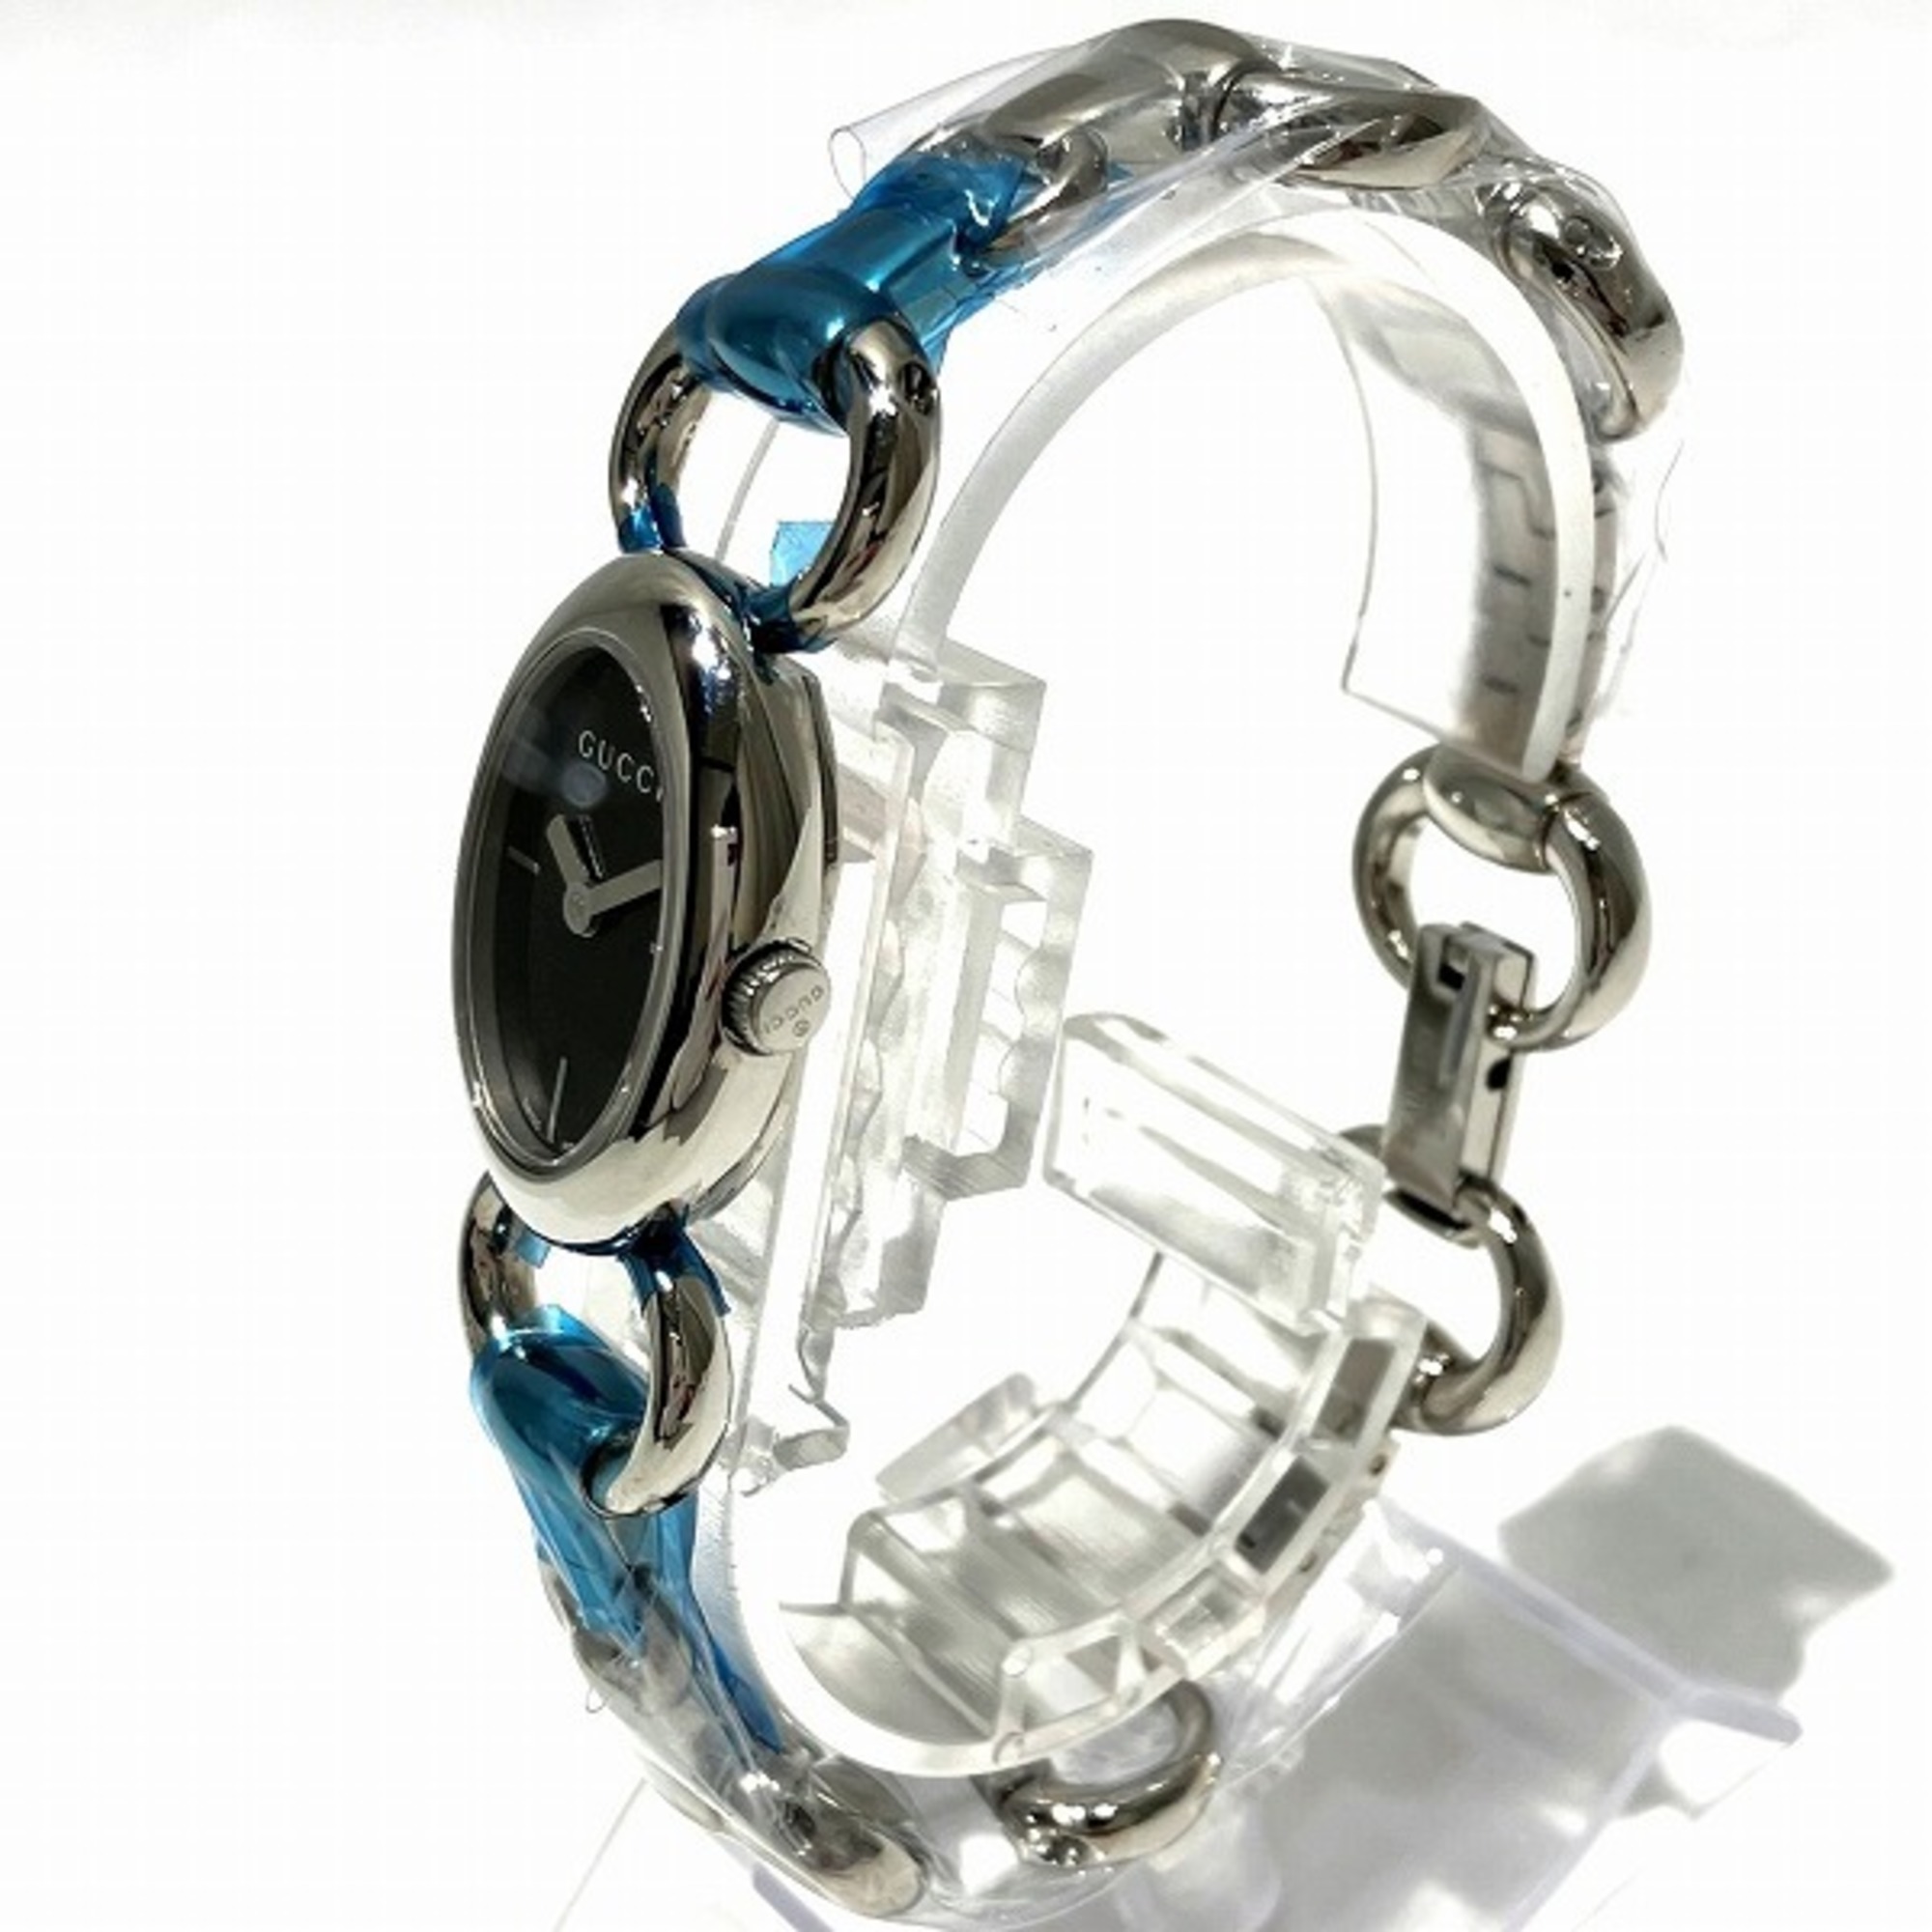 GUCCI Tornavoni 118 Quartz Watch Women's Product